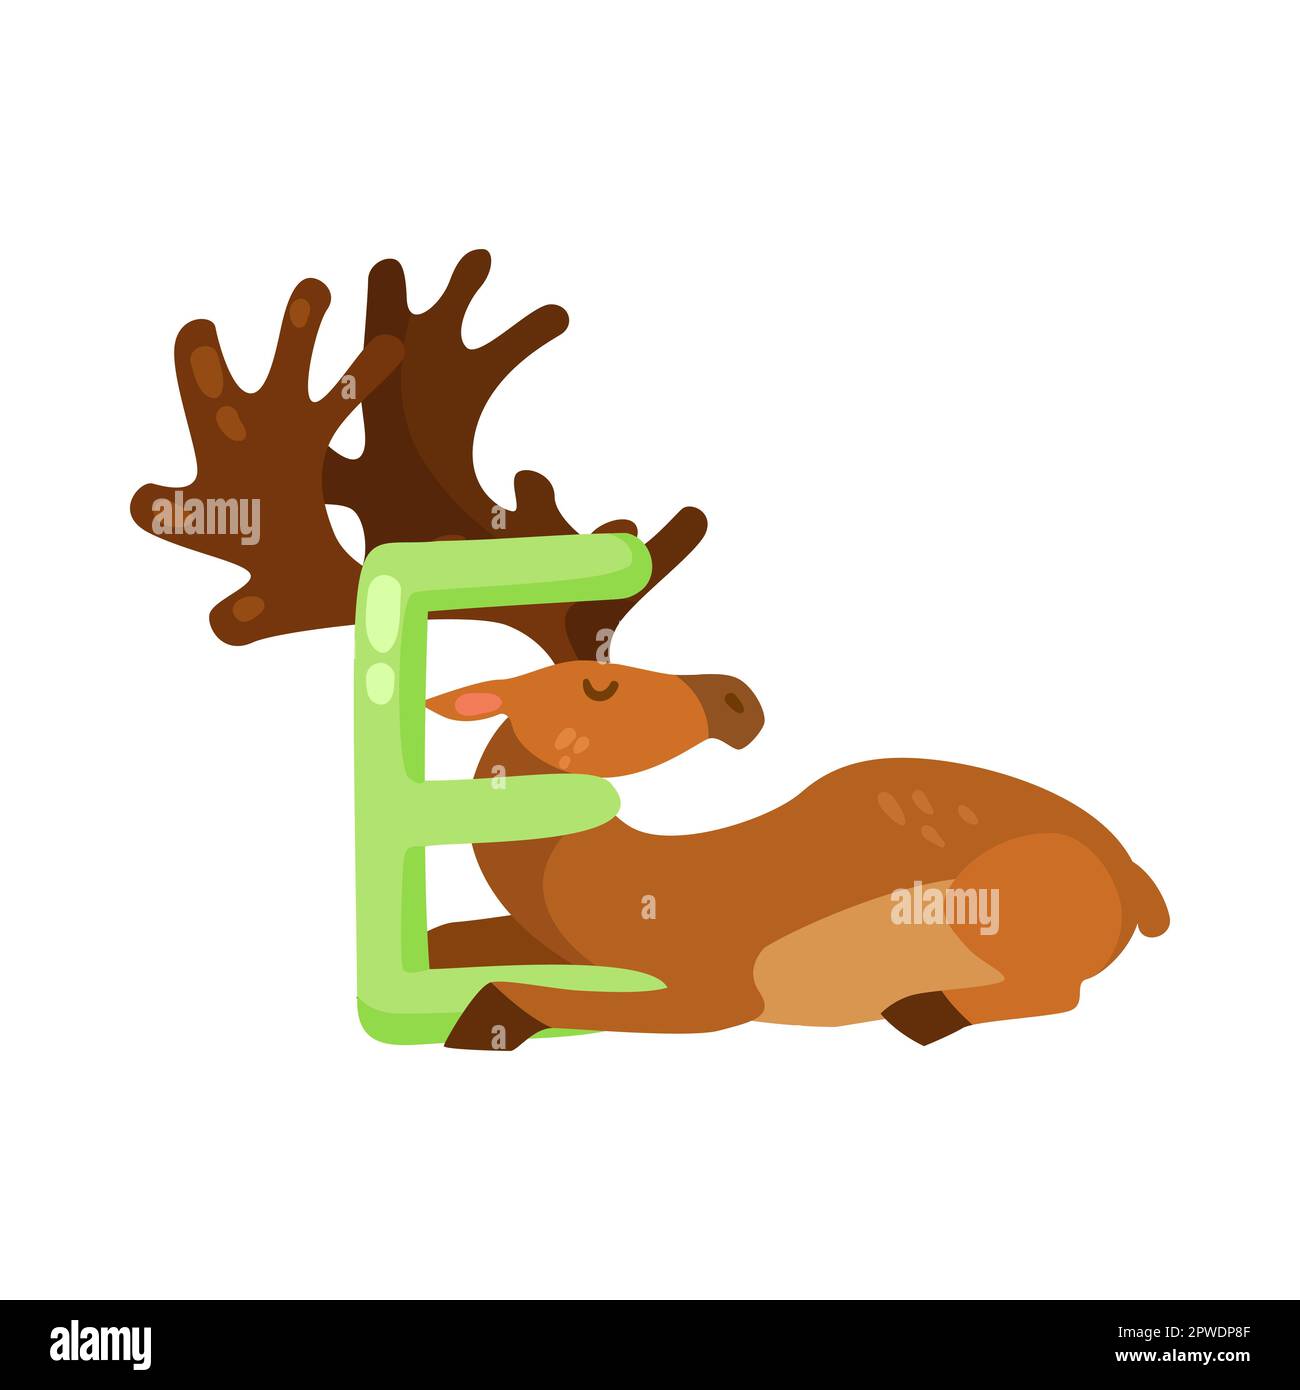 Elk character with alphabet letter e vector illustration Stock Vector